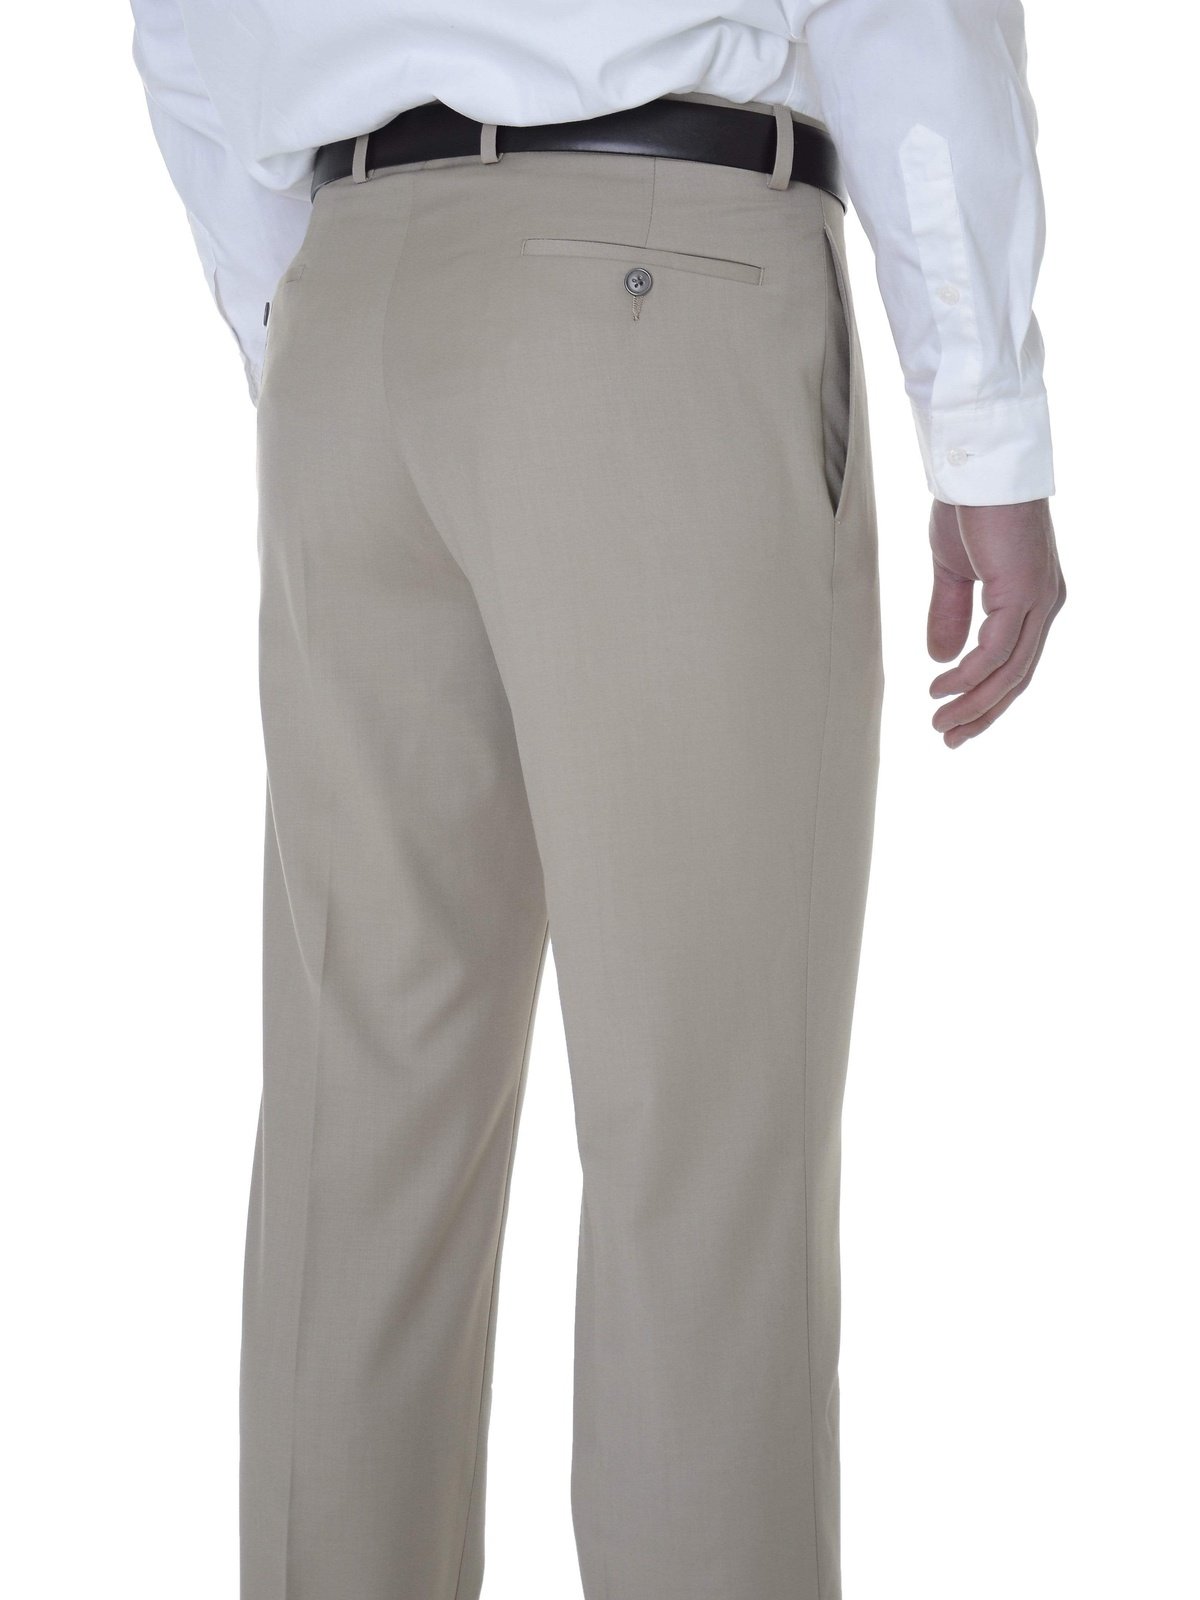 Men's Light Grey Dress Pants